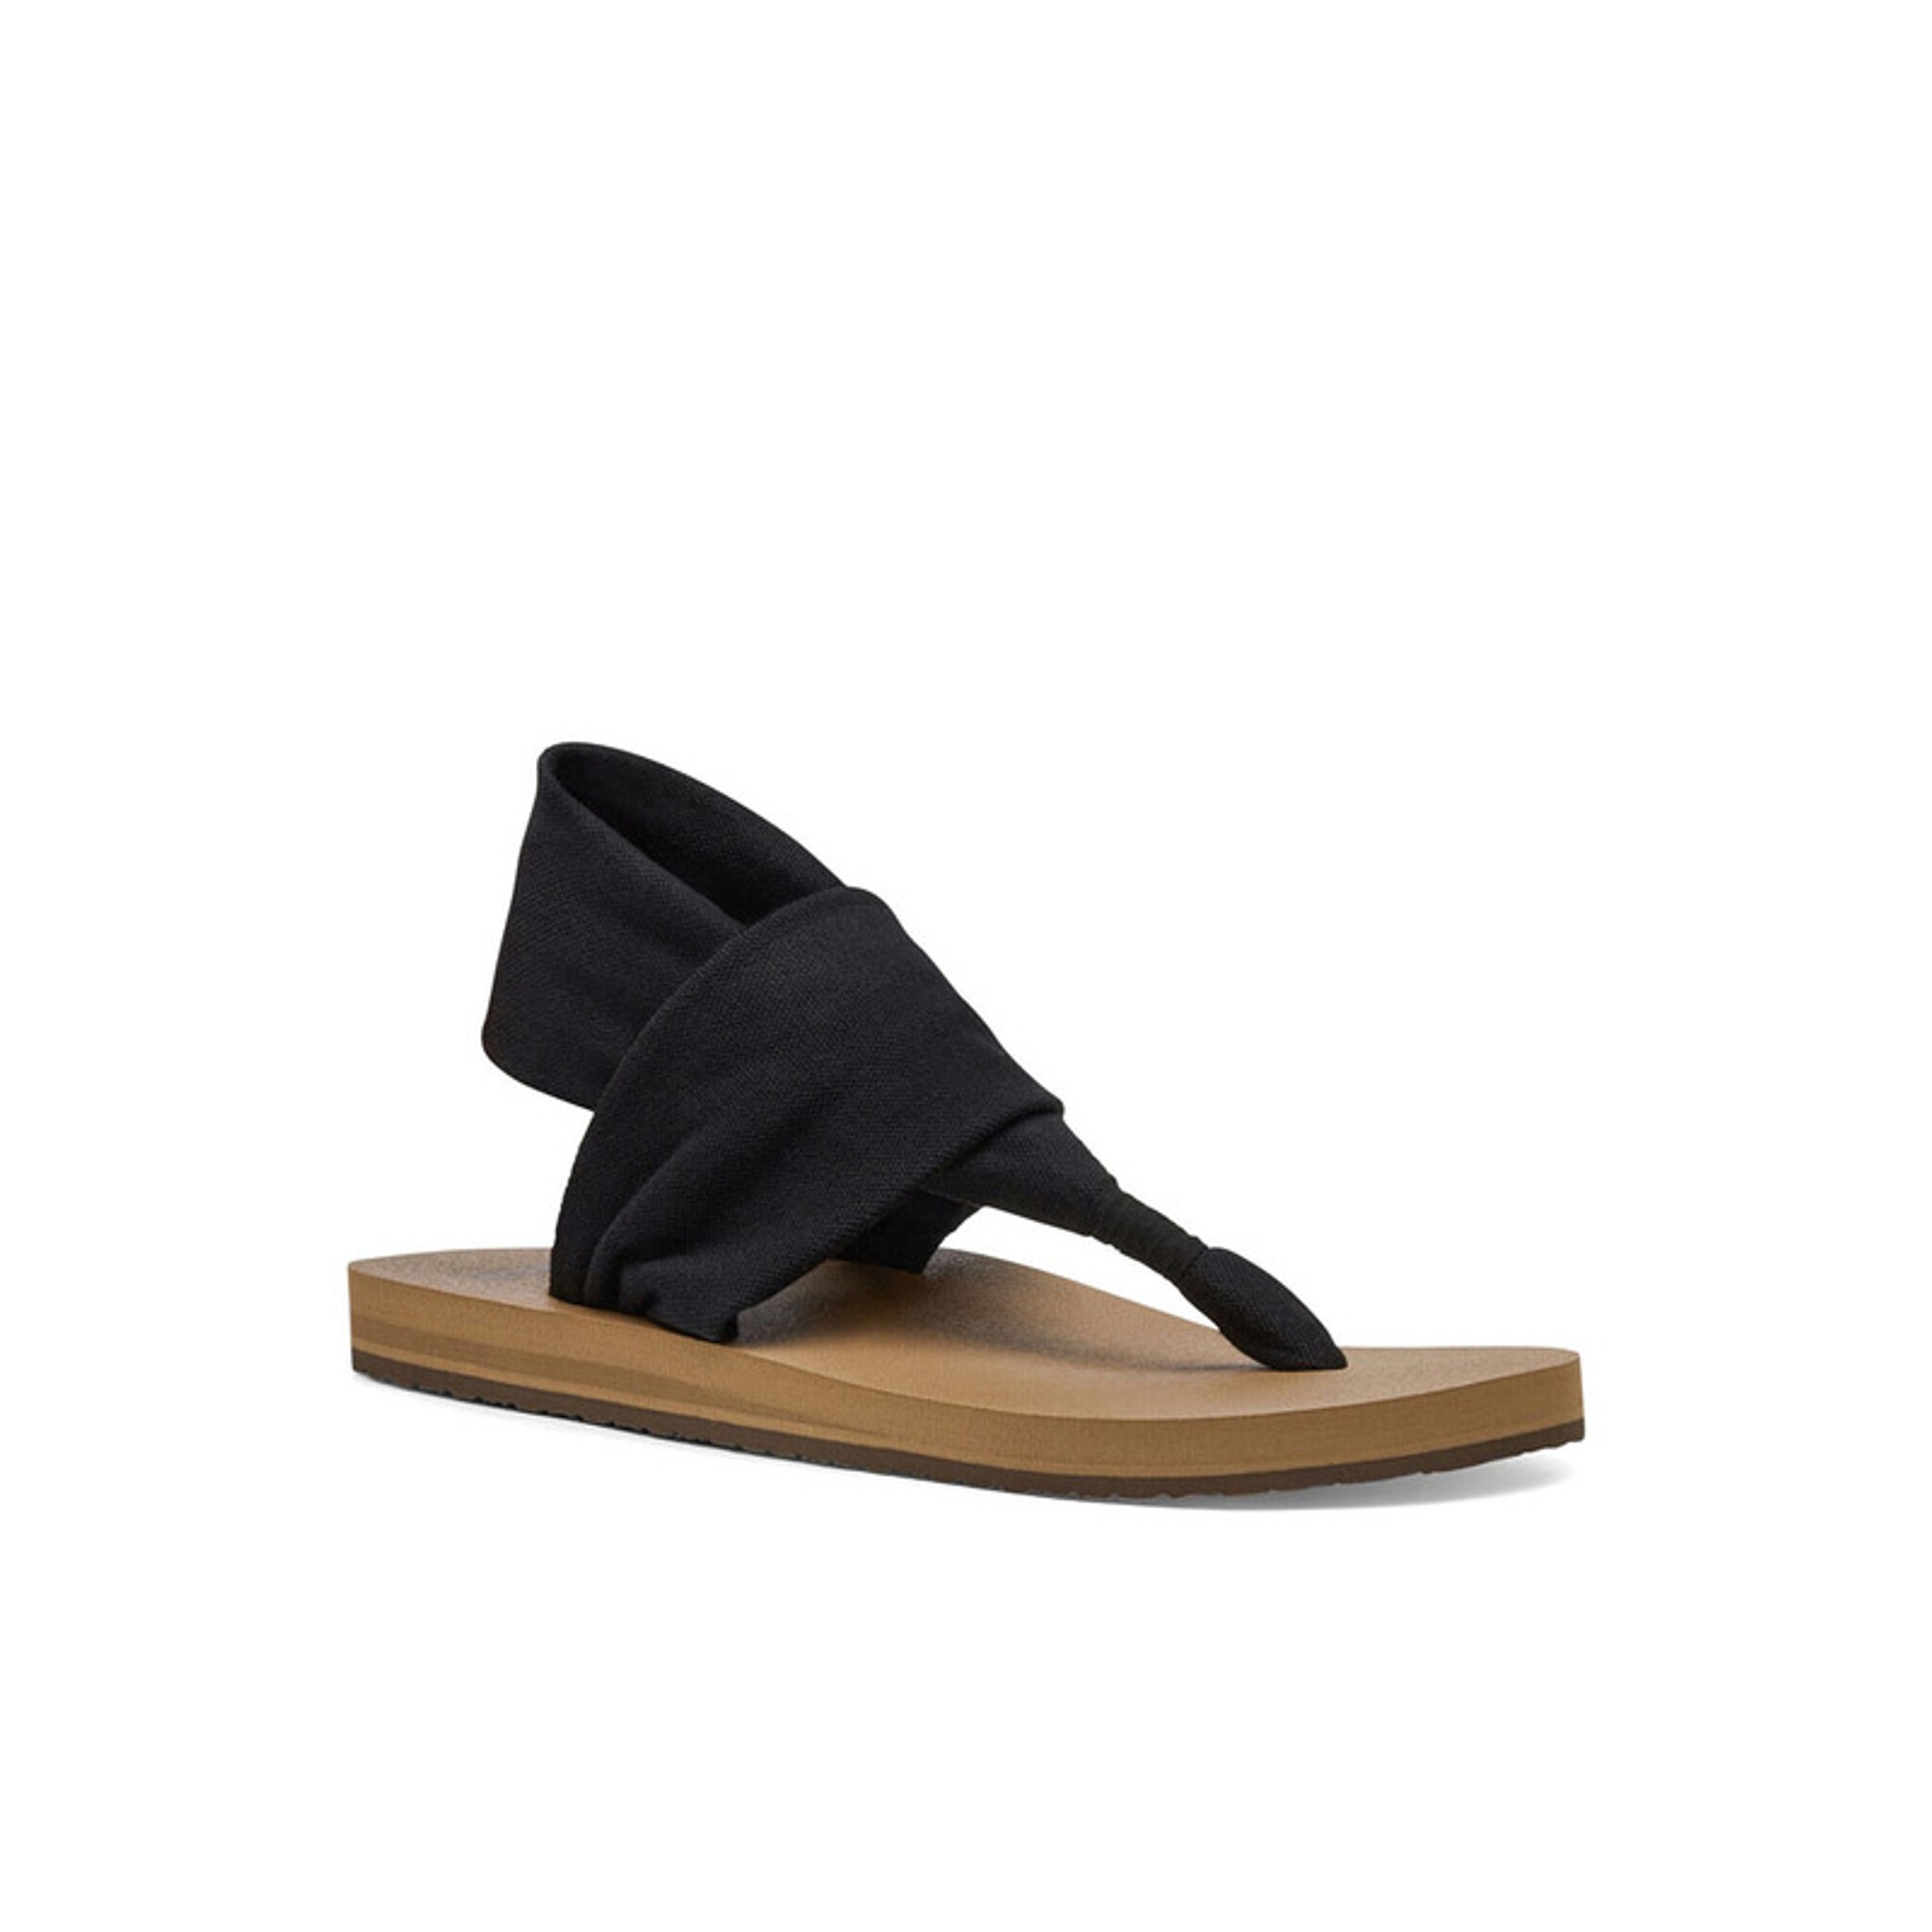 Sanuk Yoga Sling Sandals Size 9 Women's Solid Black Strappy Flip